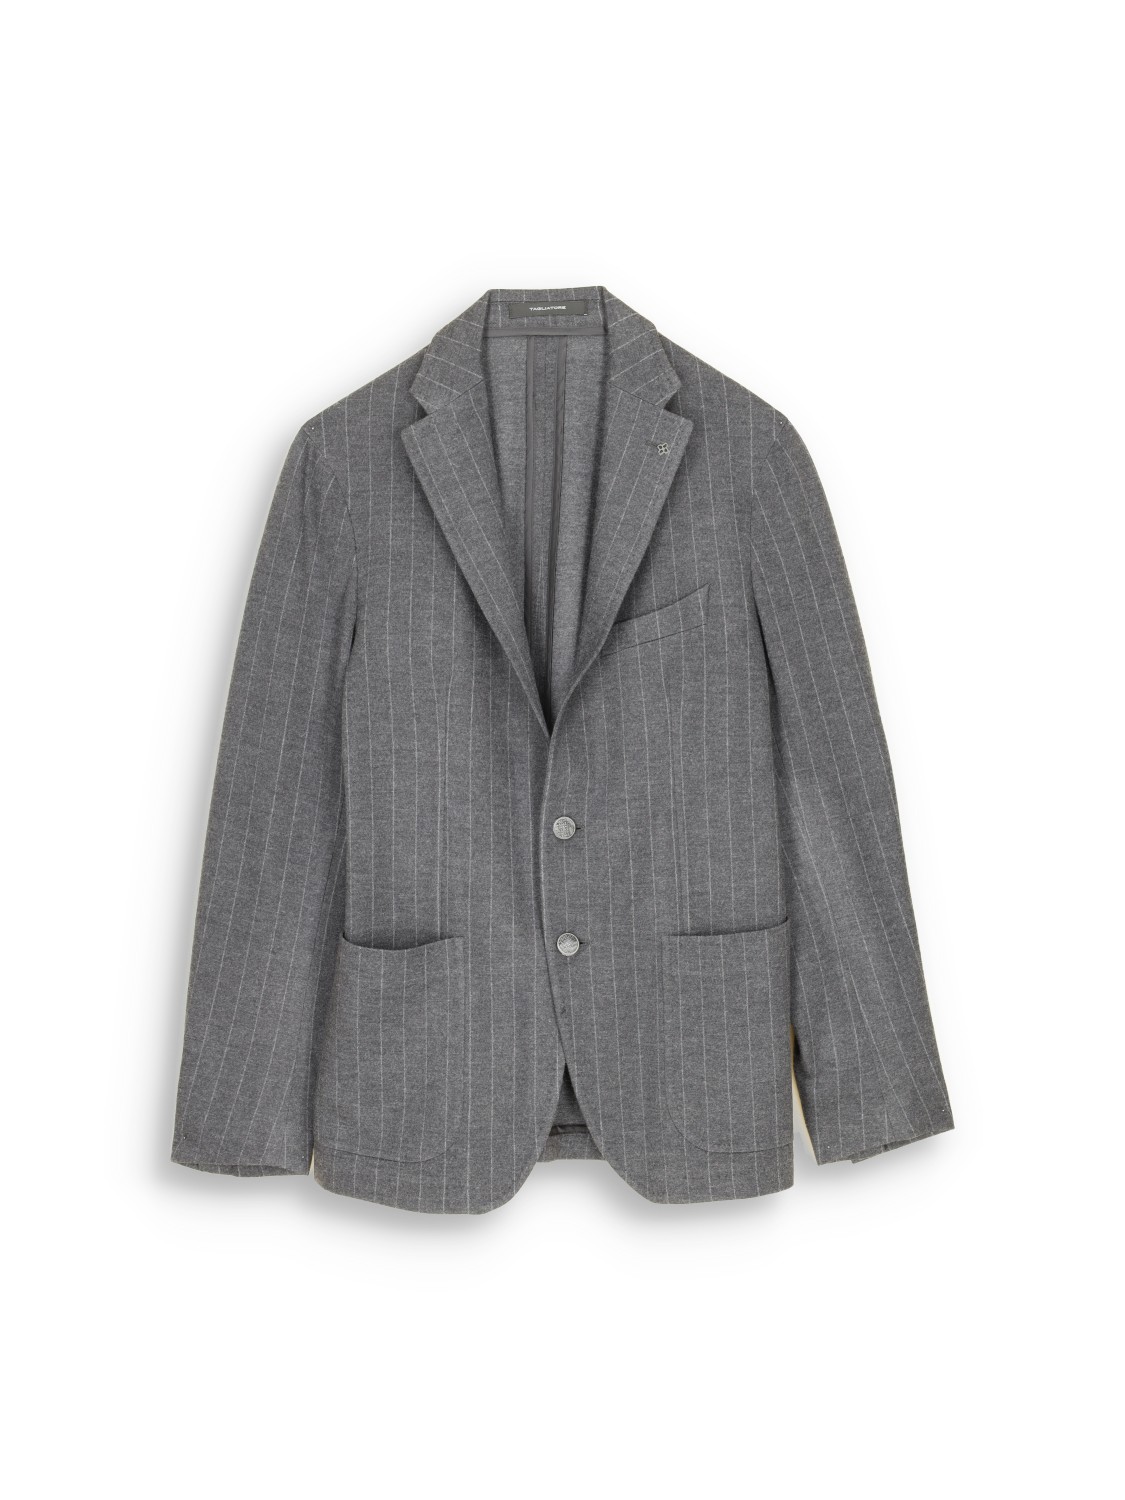 pinstripe suit with pure new wool - costume à rayures en laine vierge mélangée 